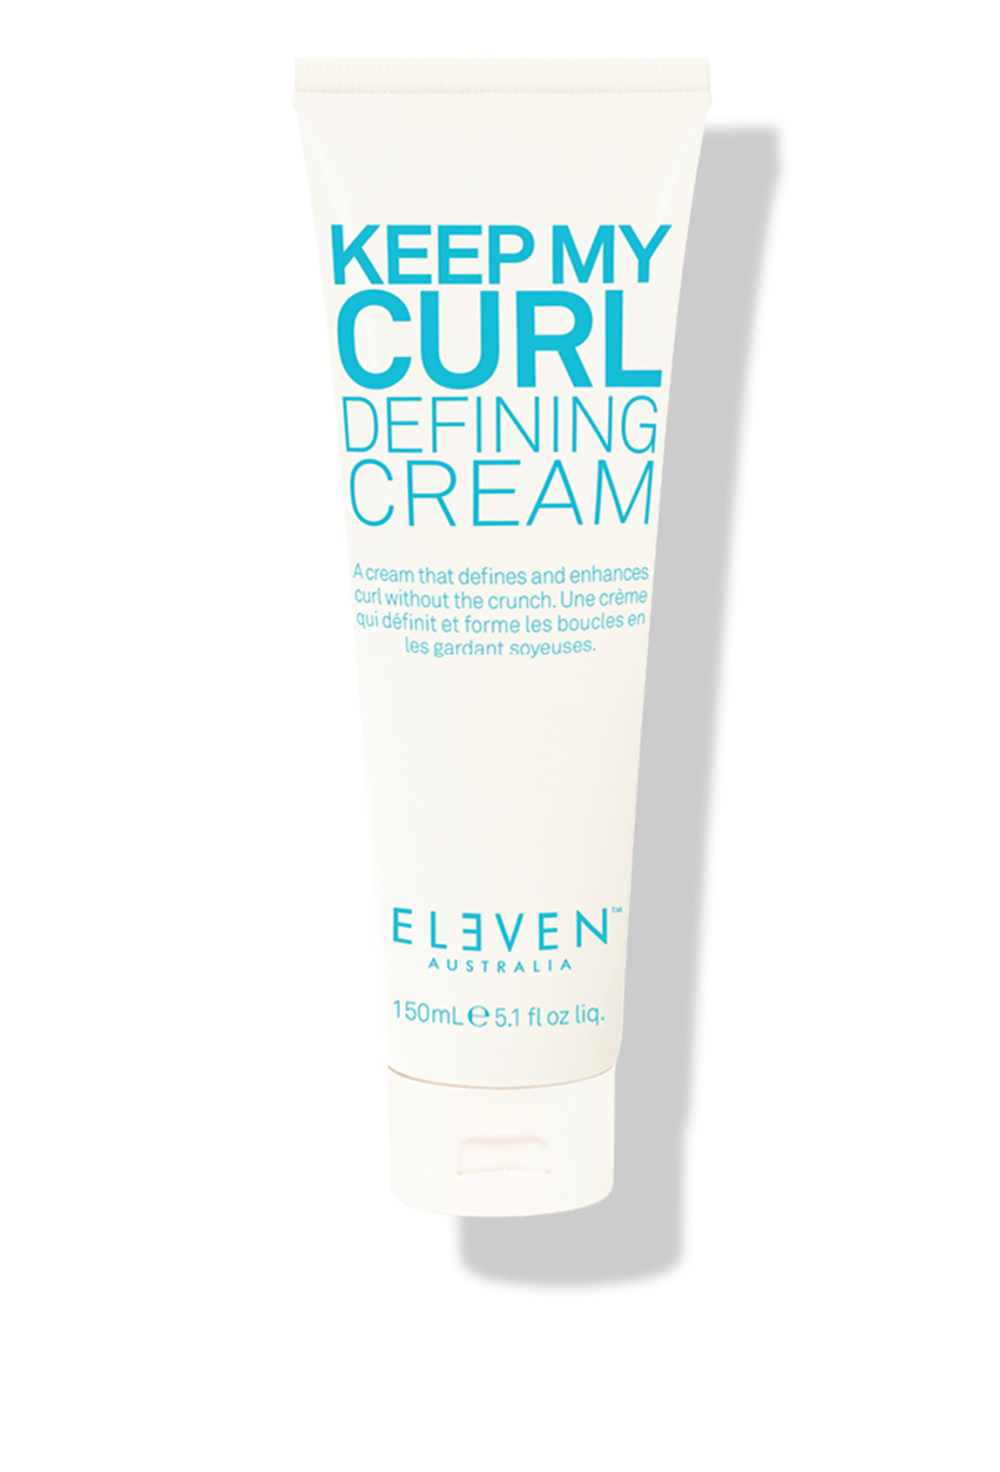 Eleven Australia keep my curl defining cream